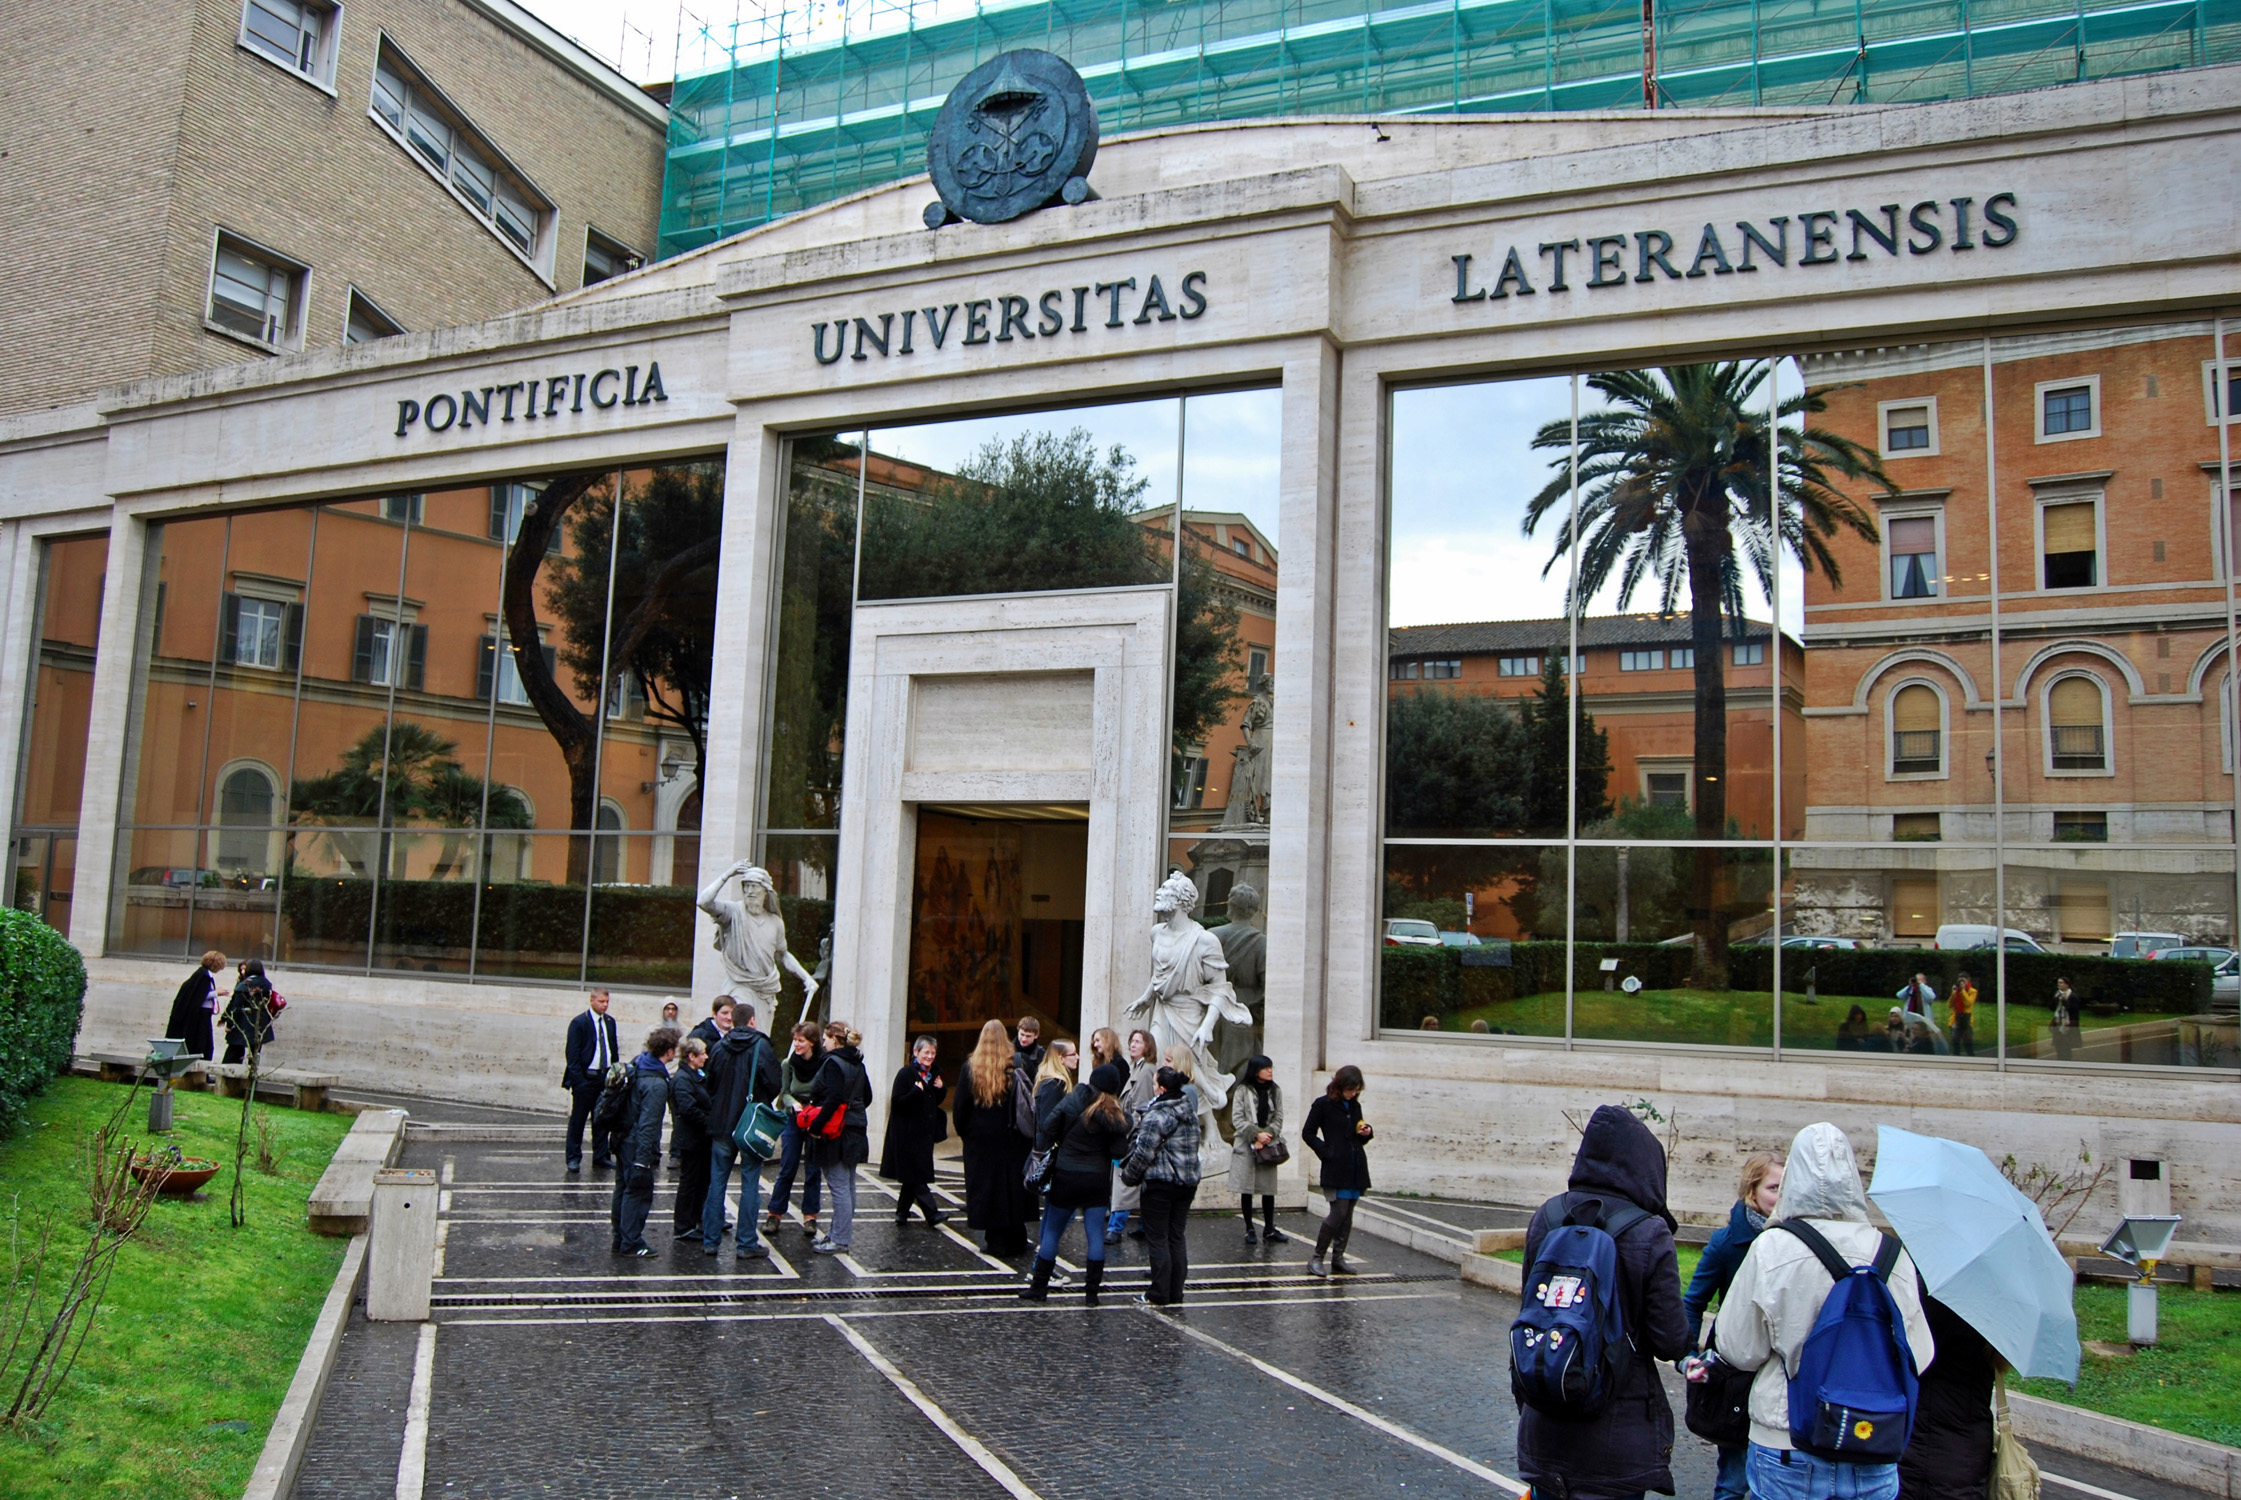 Pontificia Universitas Lateranensis